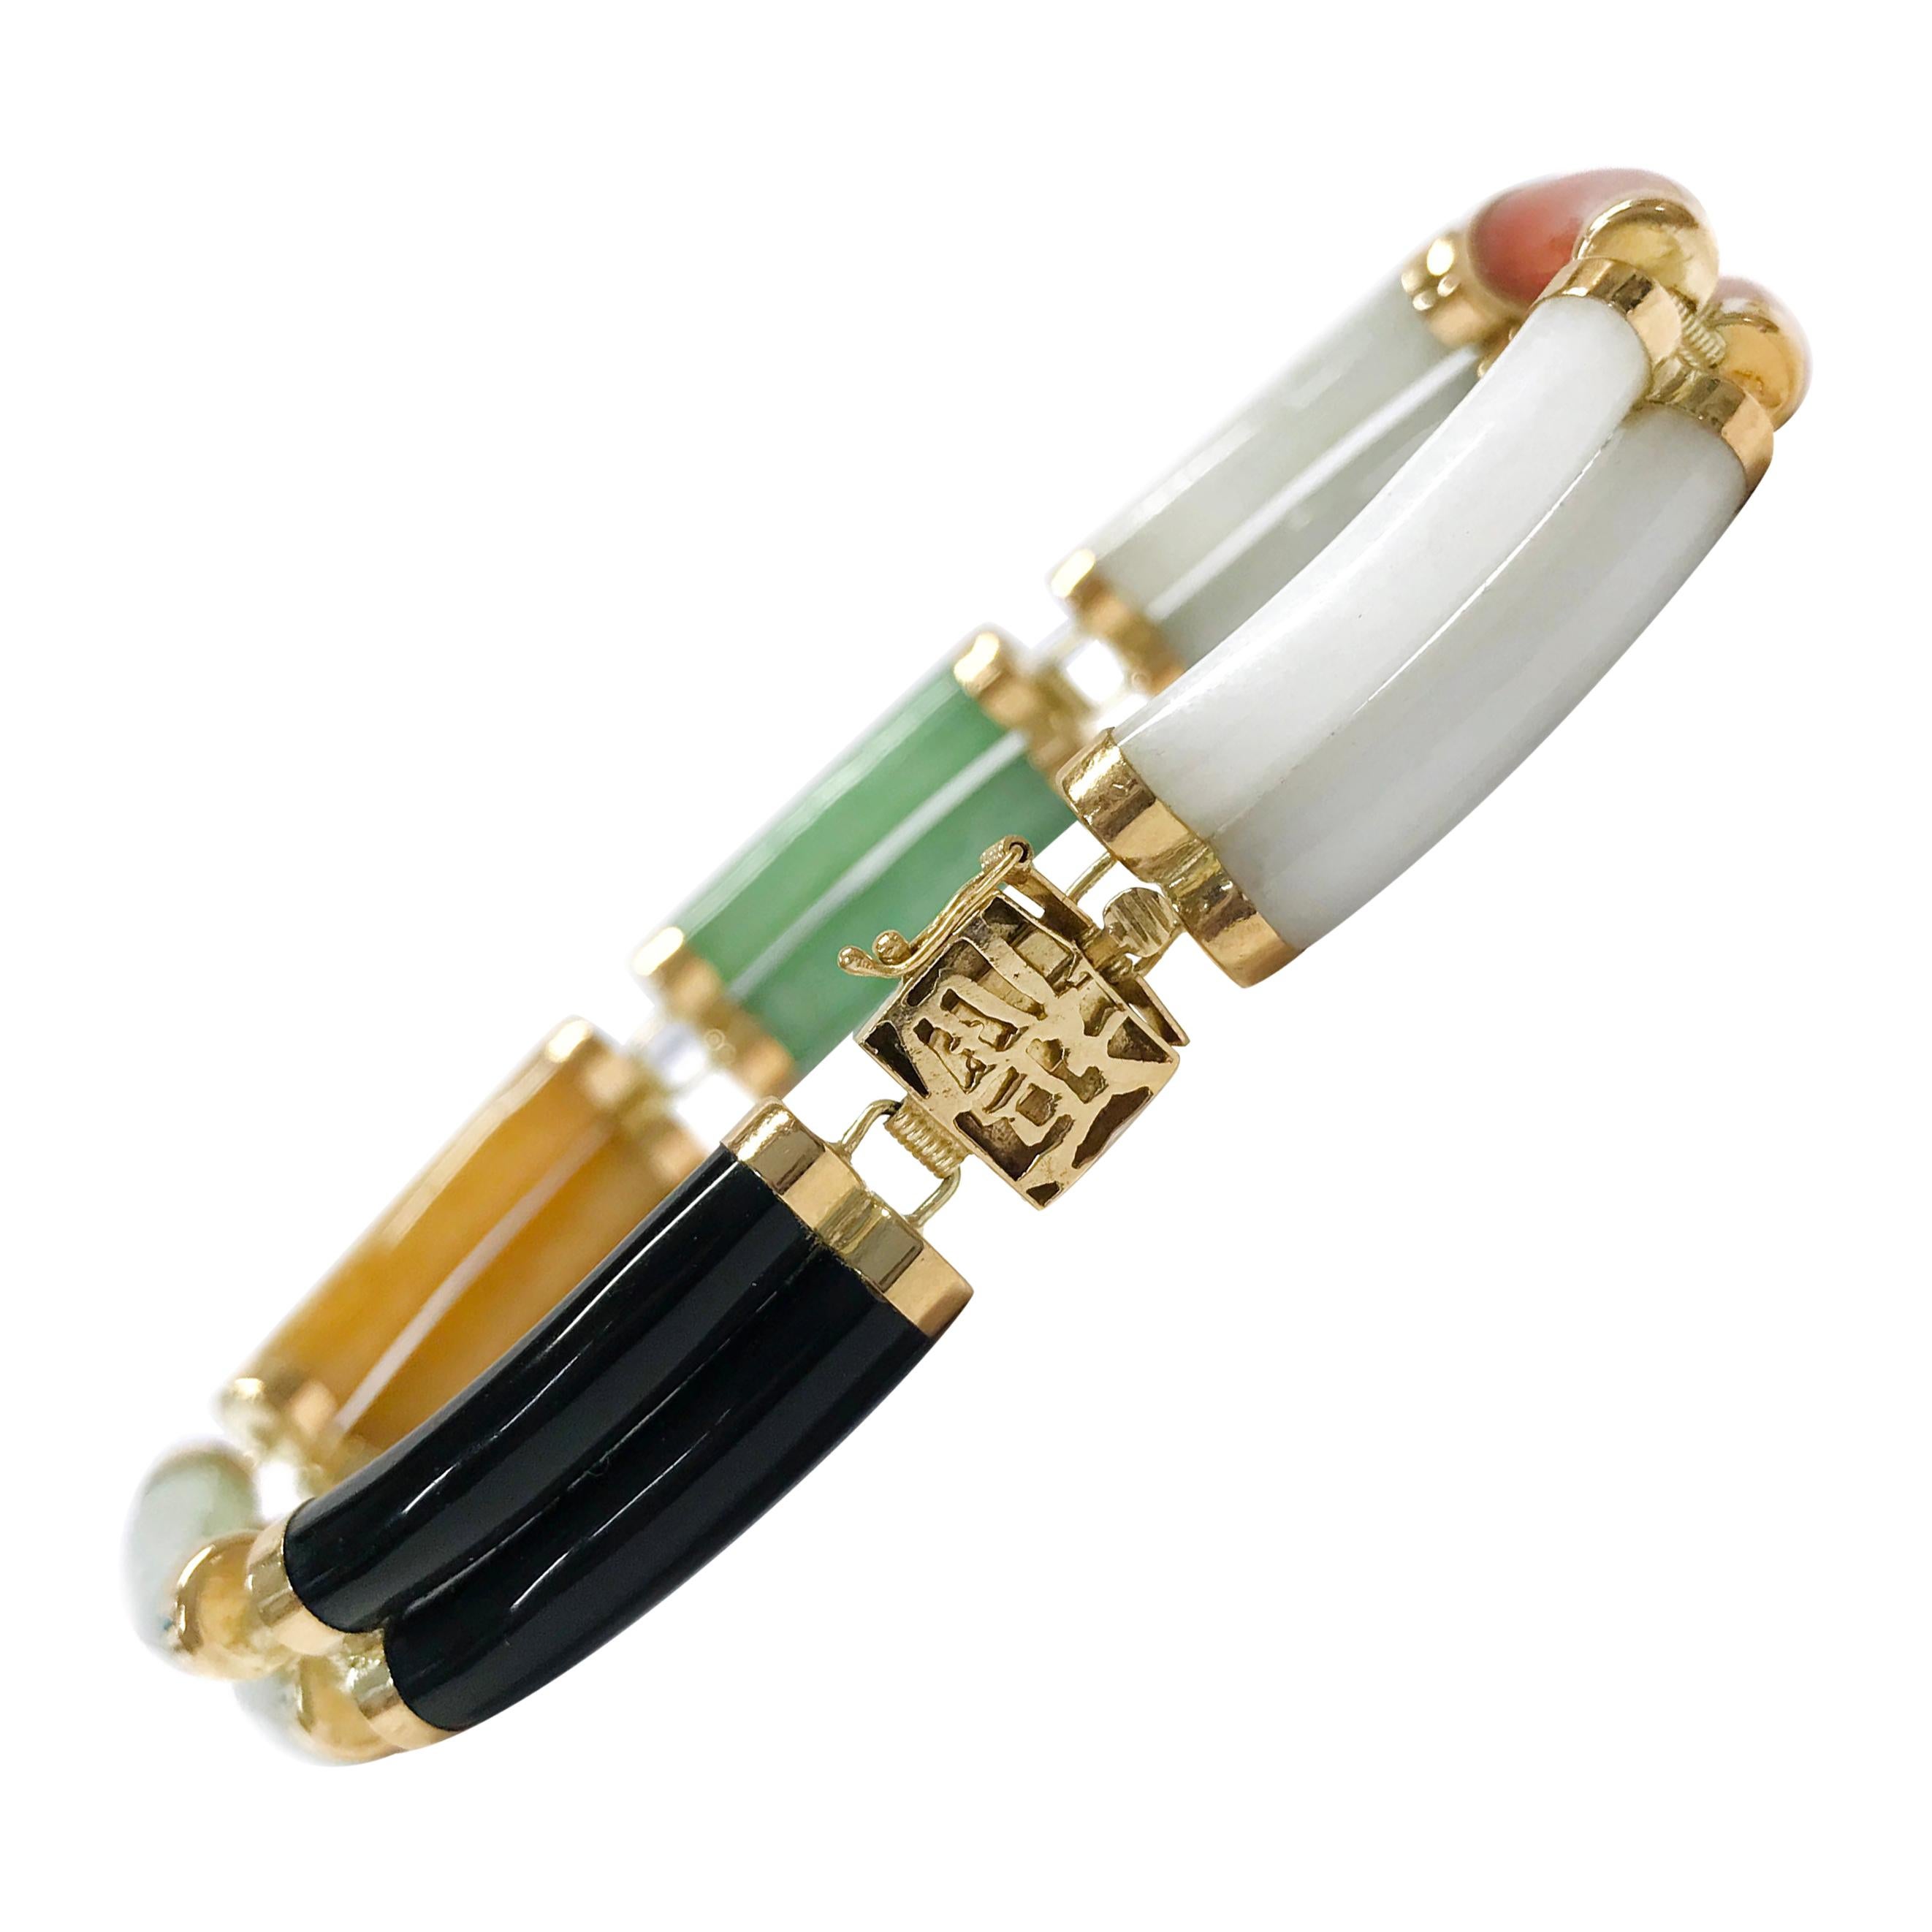 Stunning Multicolor Jade Jewelry bangle bracelet earrings set